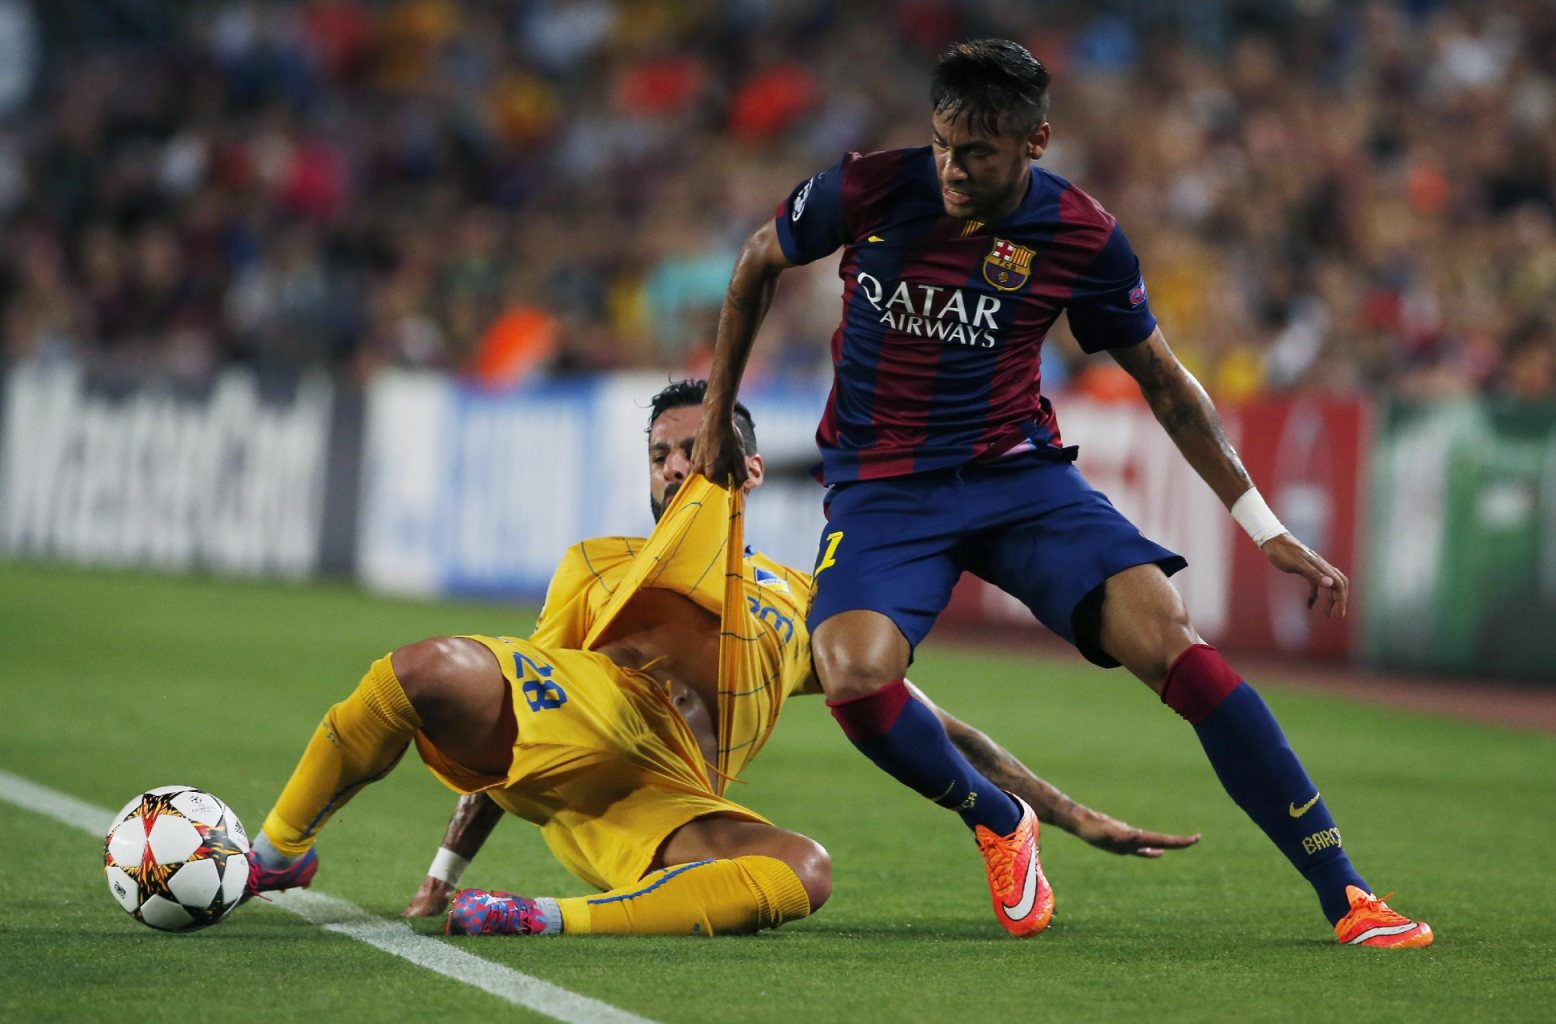 Neymar pulling his opponent shirt